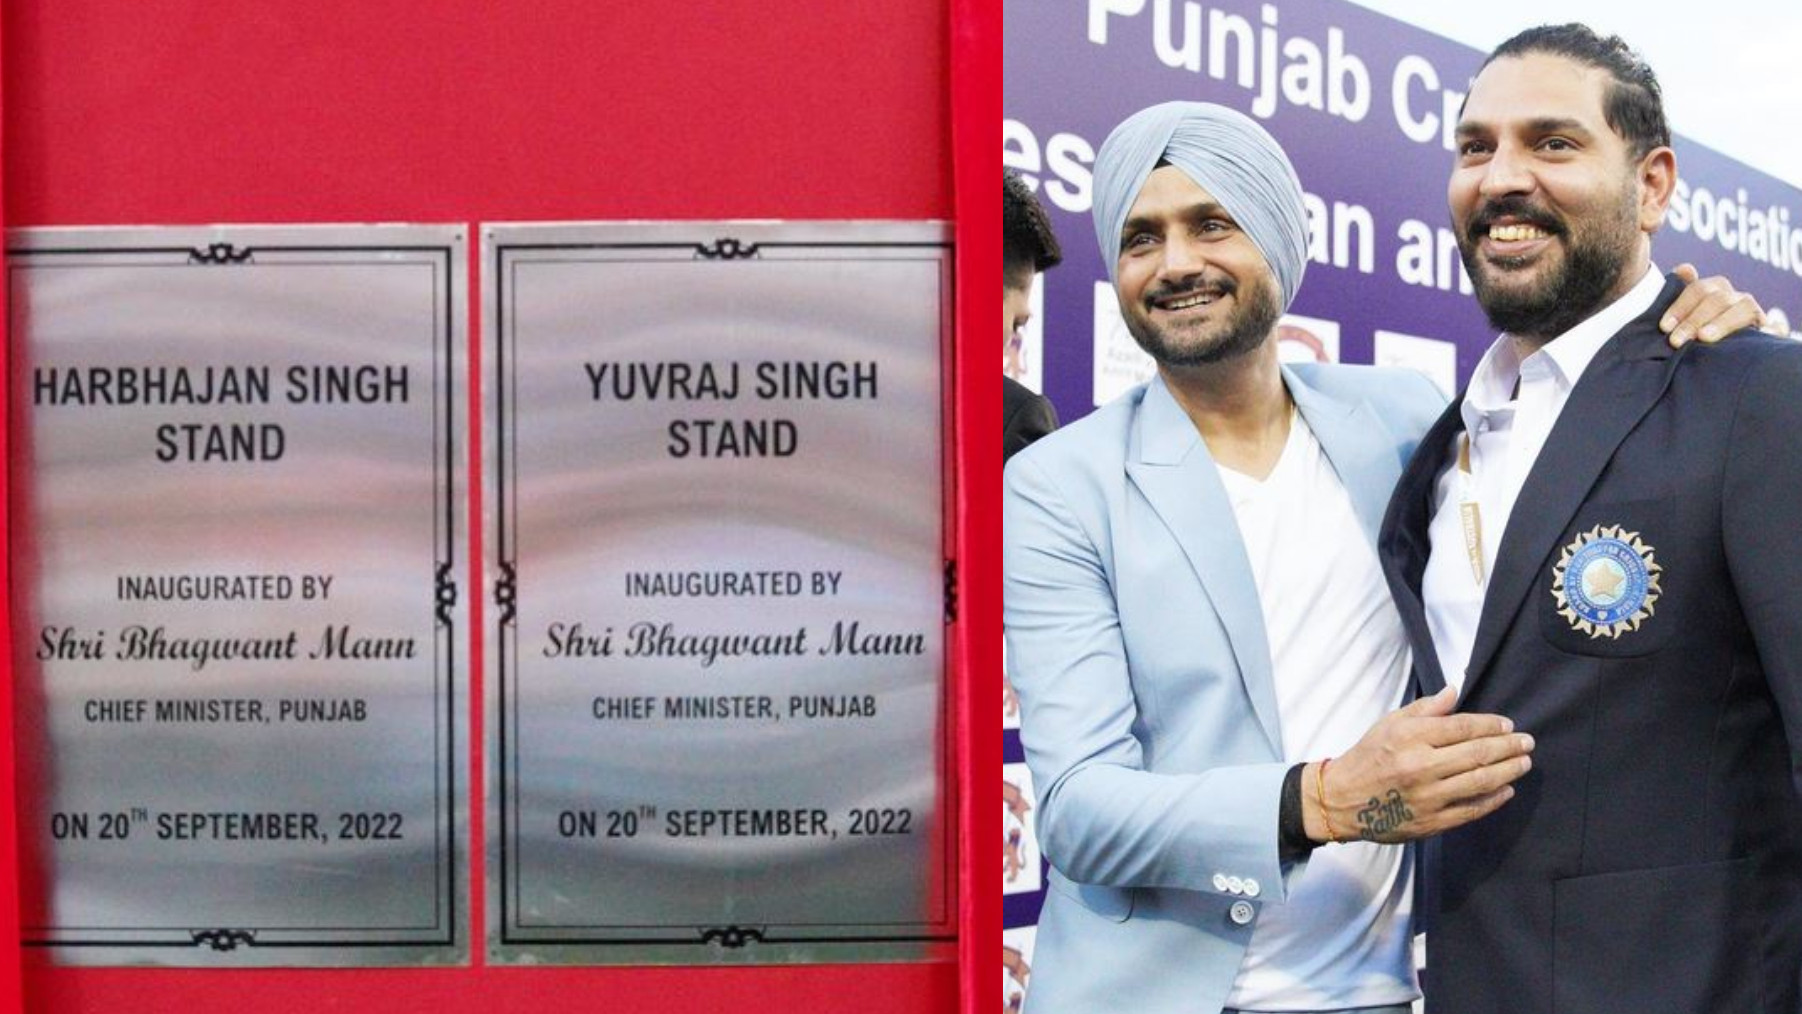 IND v AUS 2022: Punjab CM inaugurates stands named after Harbhajan Singh and Yuvraj Singh at PCA Stadium